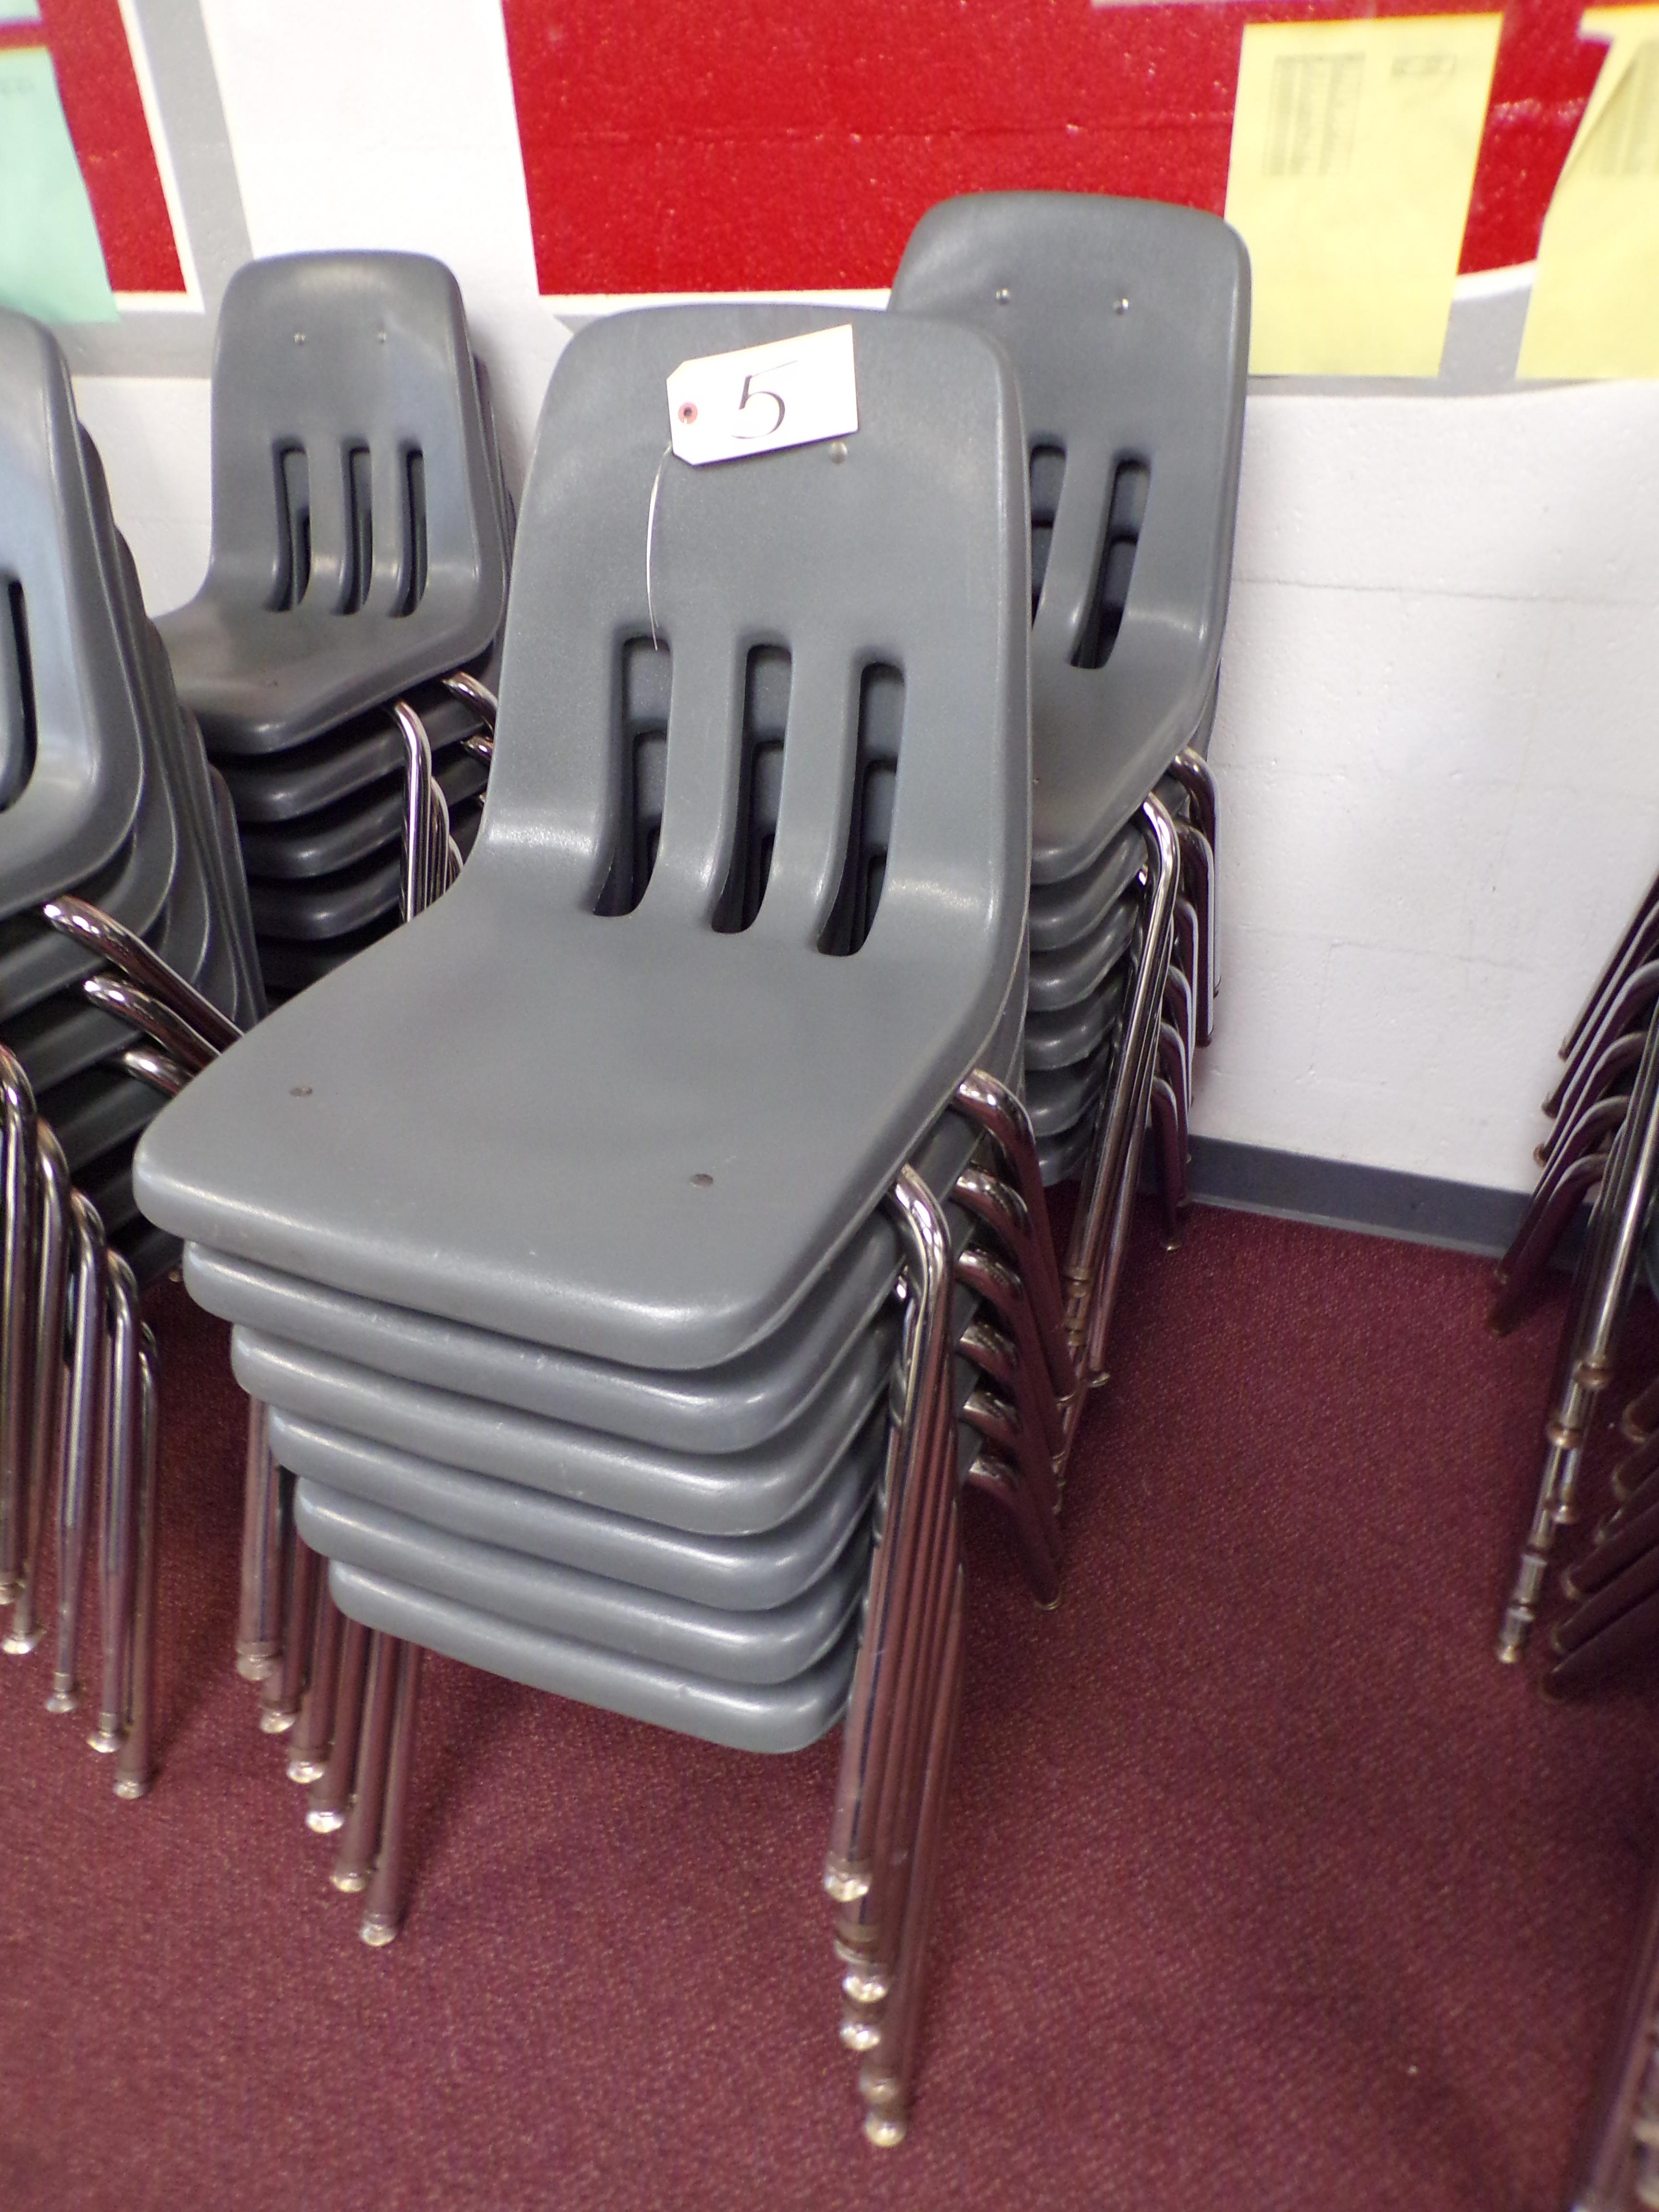 (12) Gray plastic school desk chairs